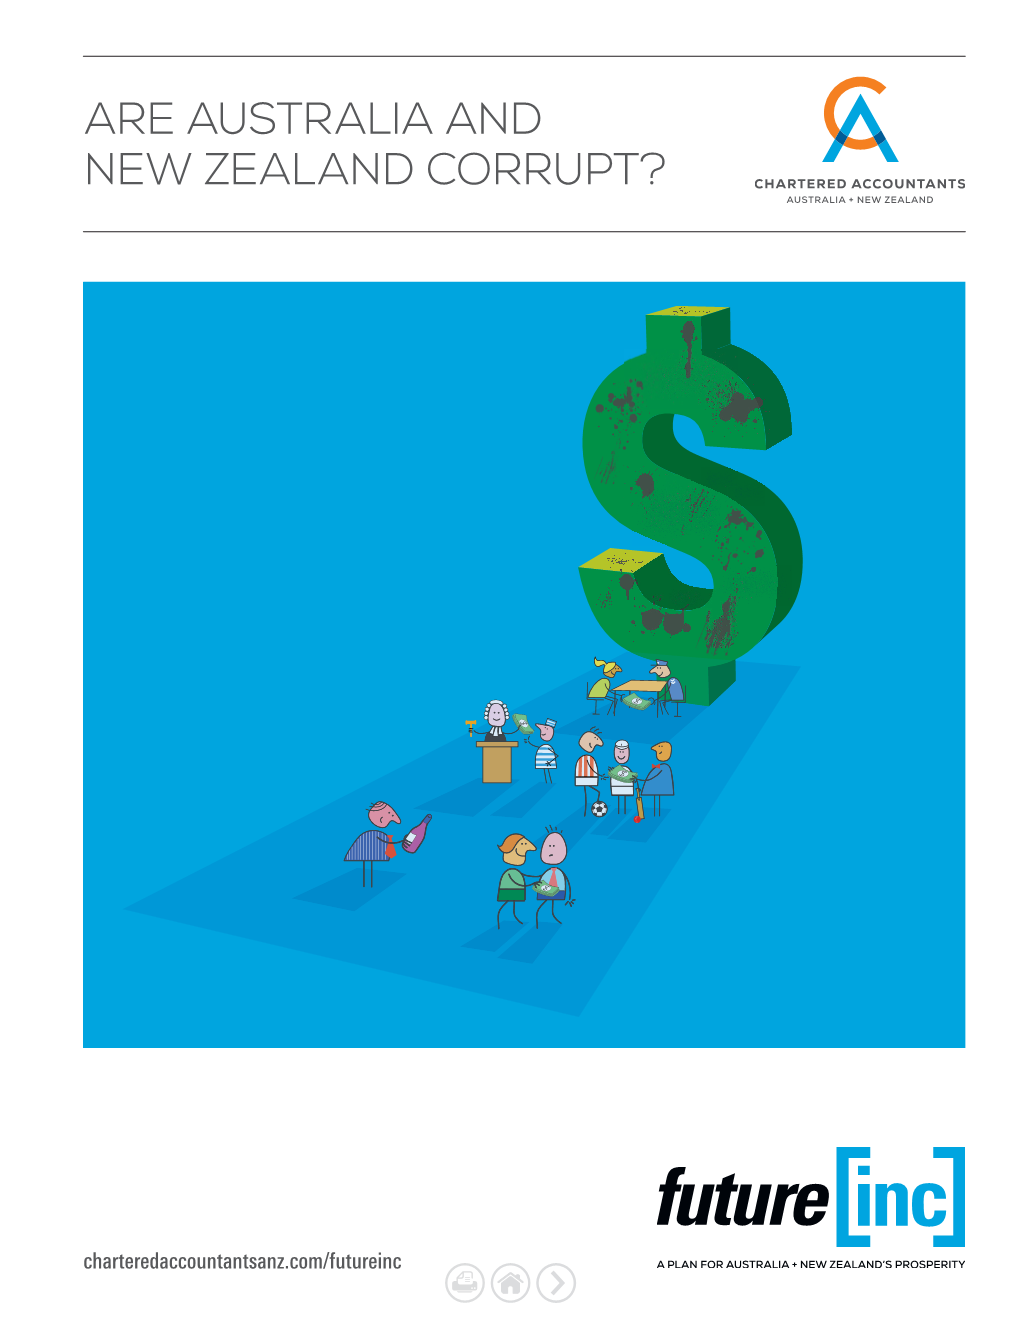 Are Australia and New Zealand Corrupt?